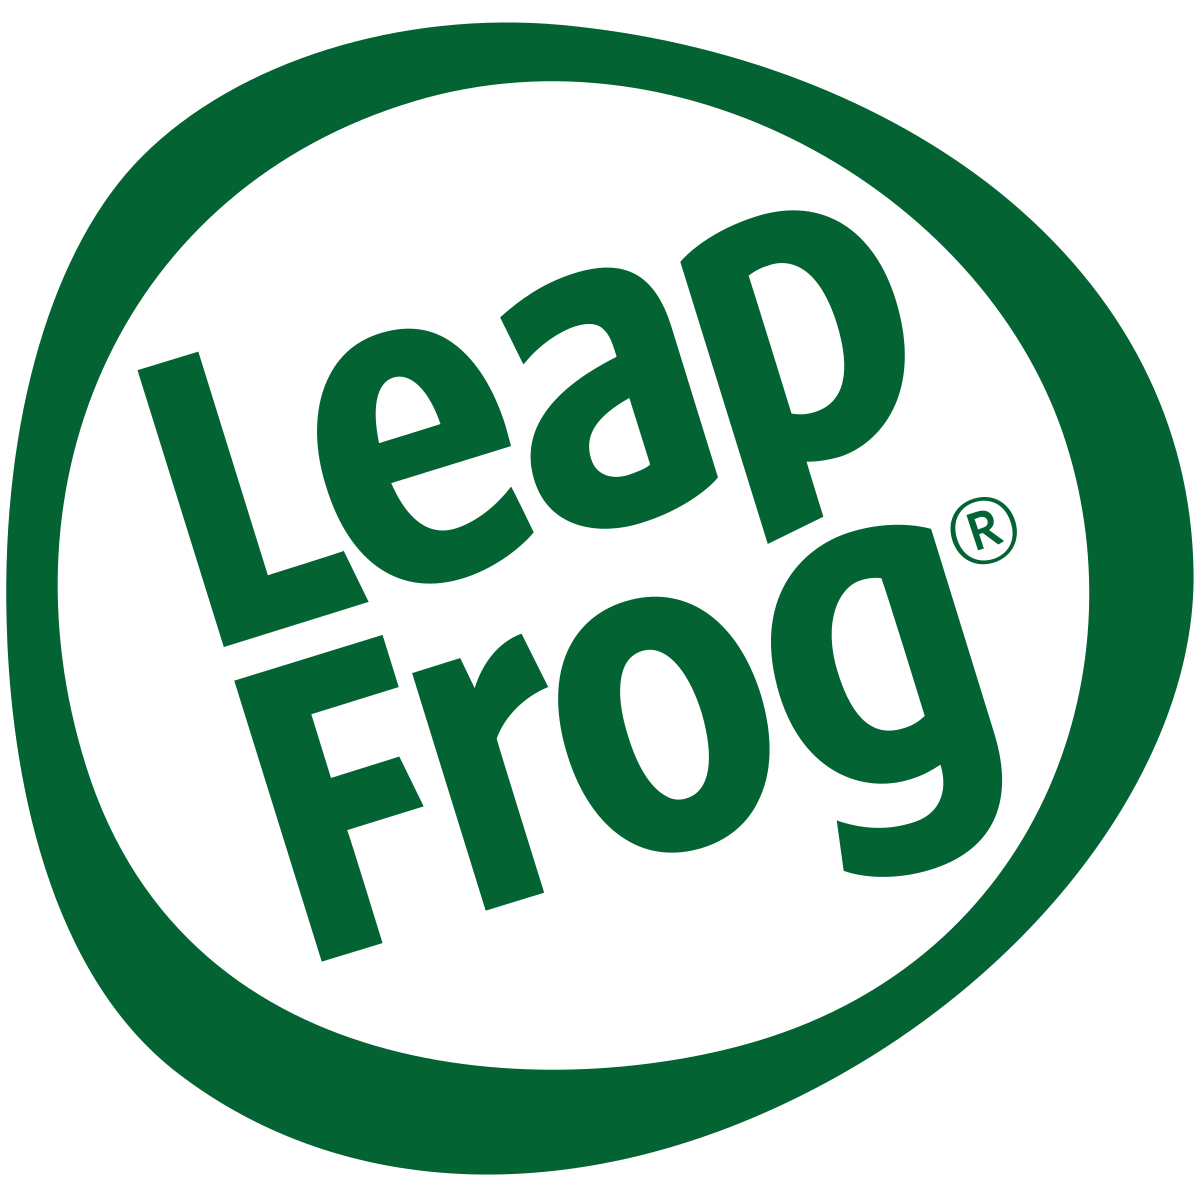 Tad Name Logo - LeapFrog Enterprises